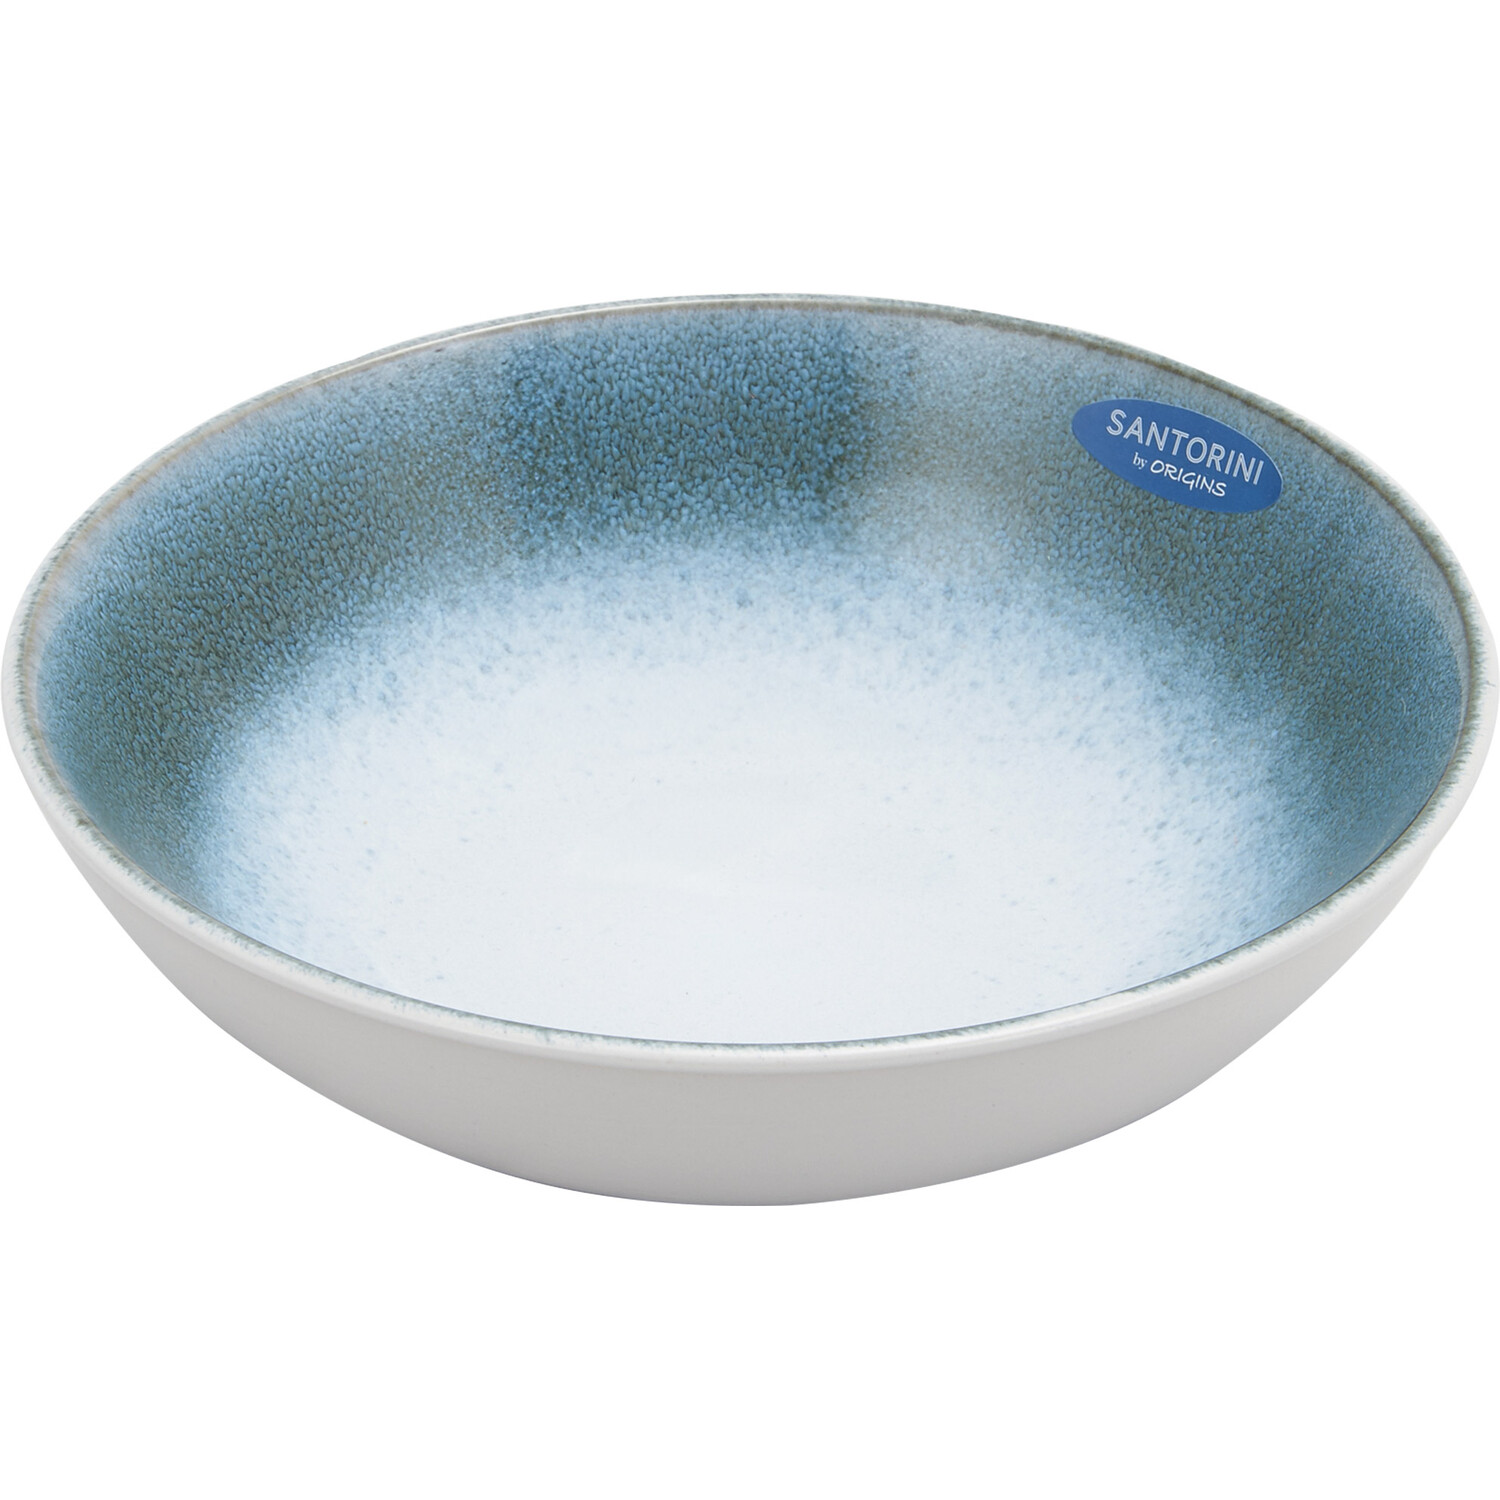 Santorini Reactive Glaze Pasta Bowl - Blue Image 1